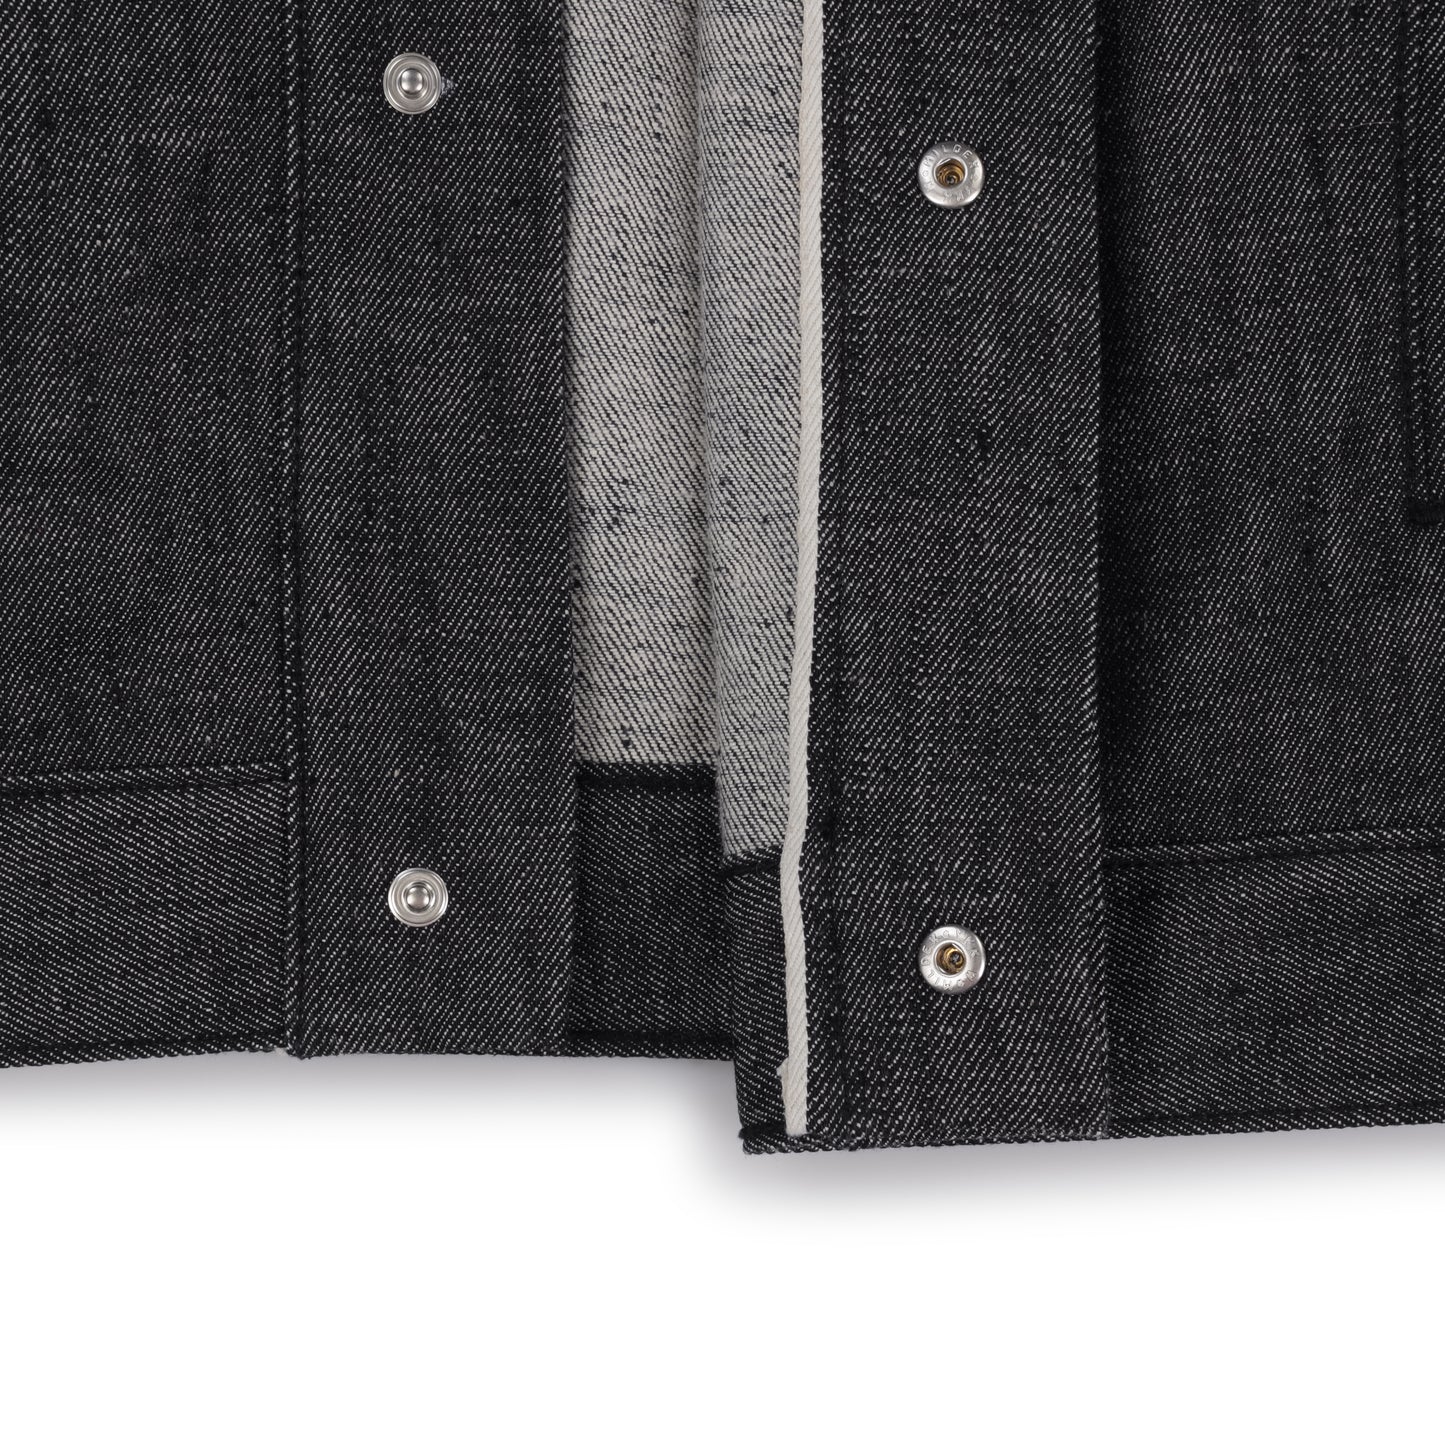 raglan jacket _ black/grey